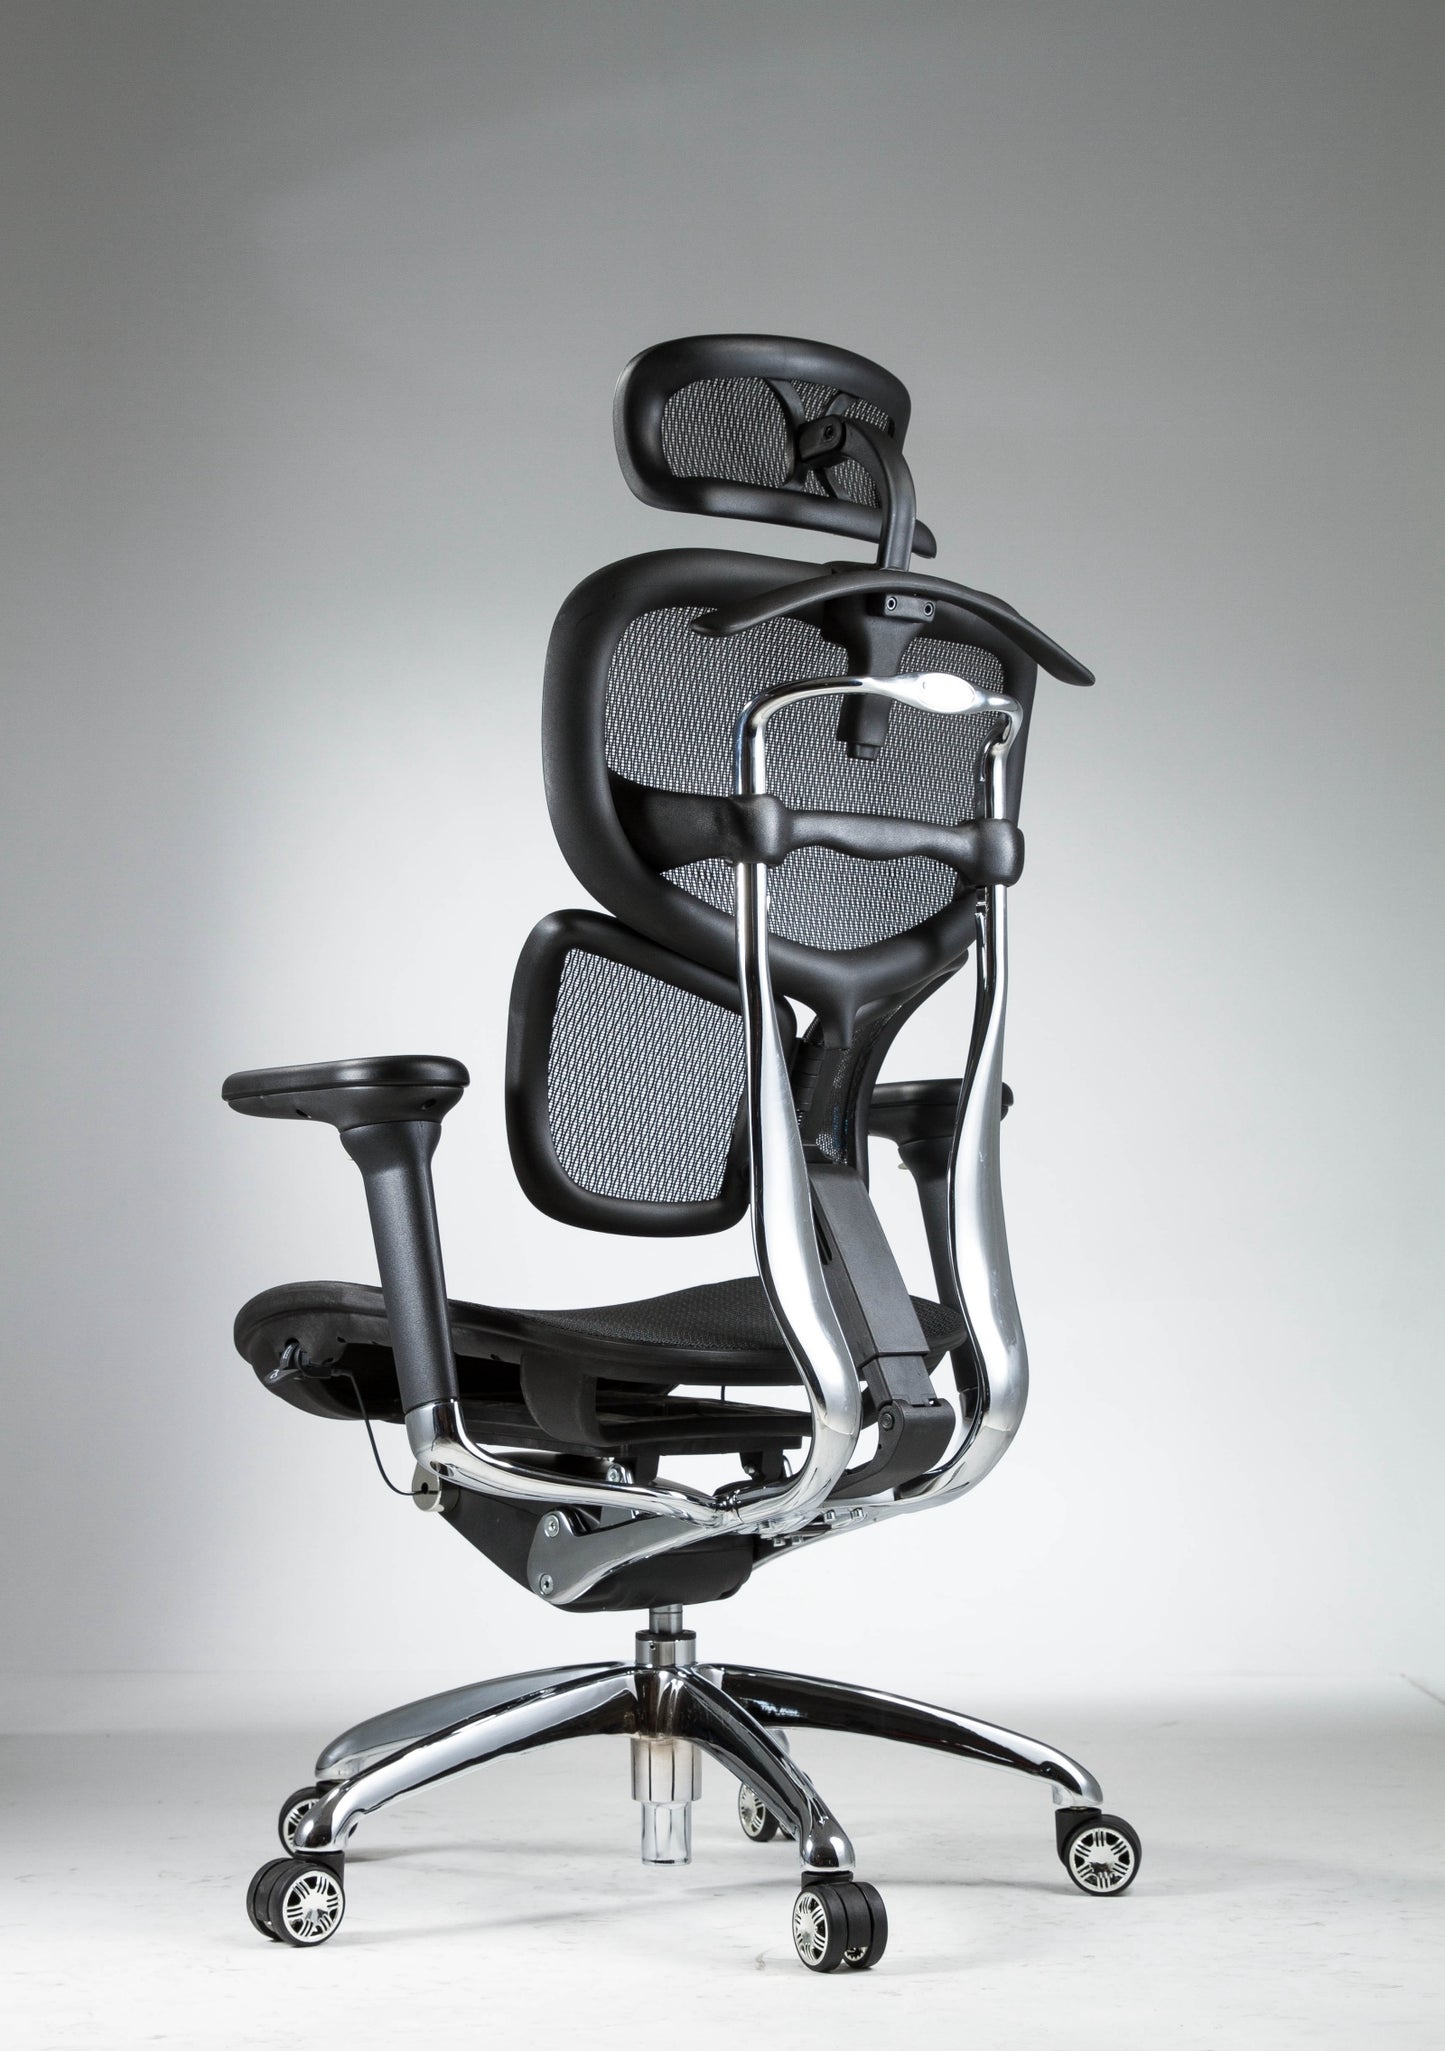 Sihoo A7 Ergonomic Chair